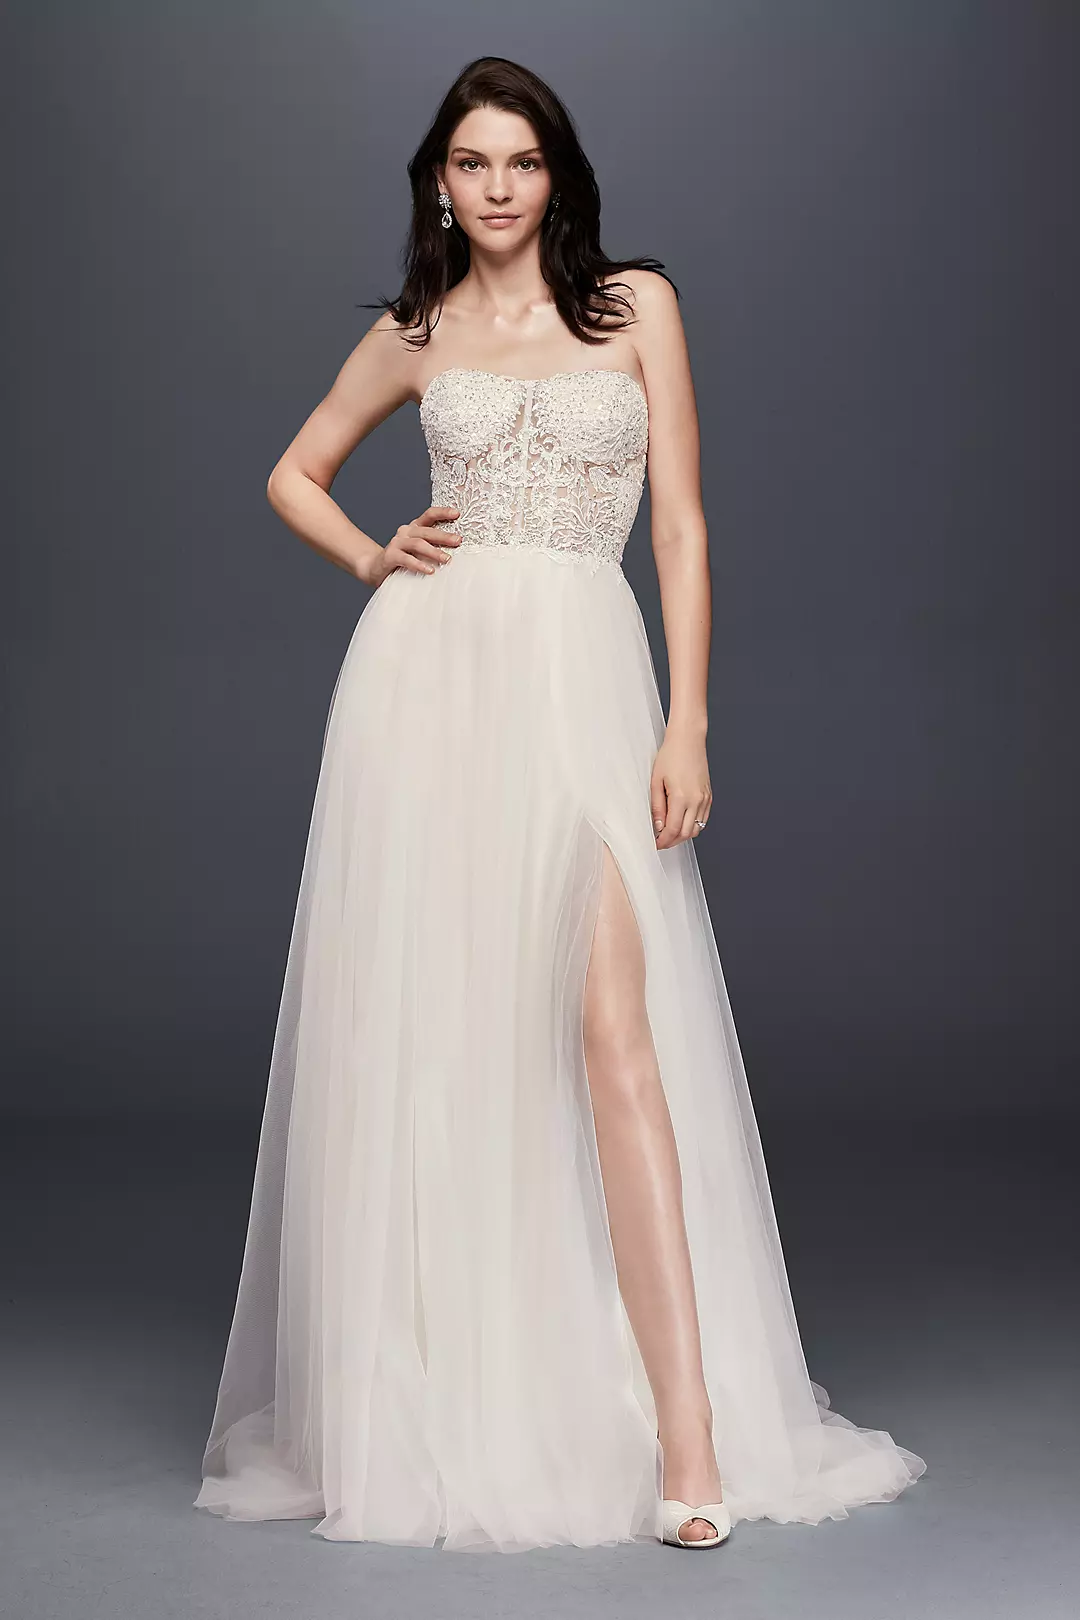 Strapless Wedding Dress with Tulle Slit Skirt Image